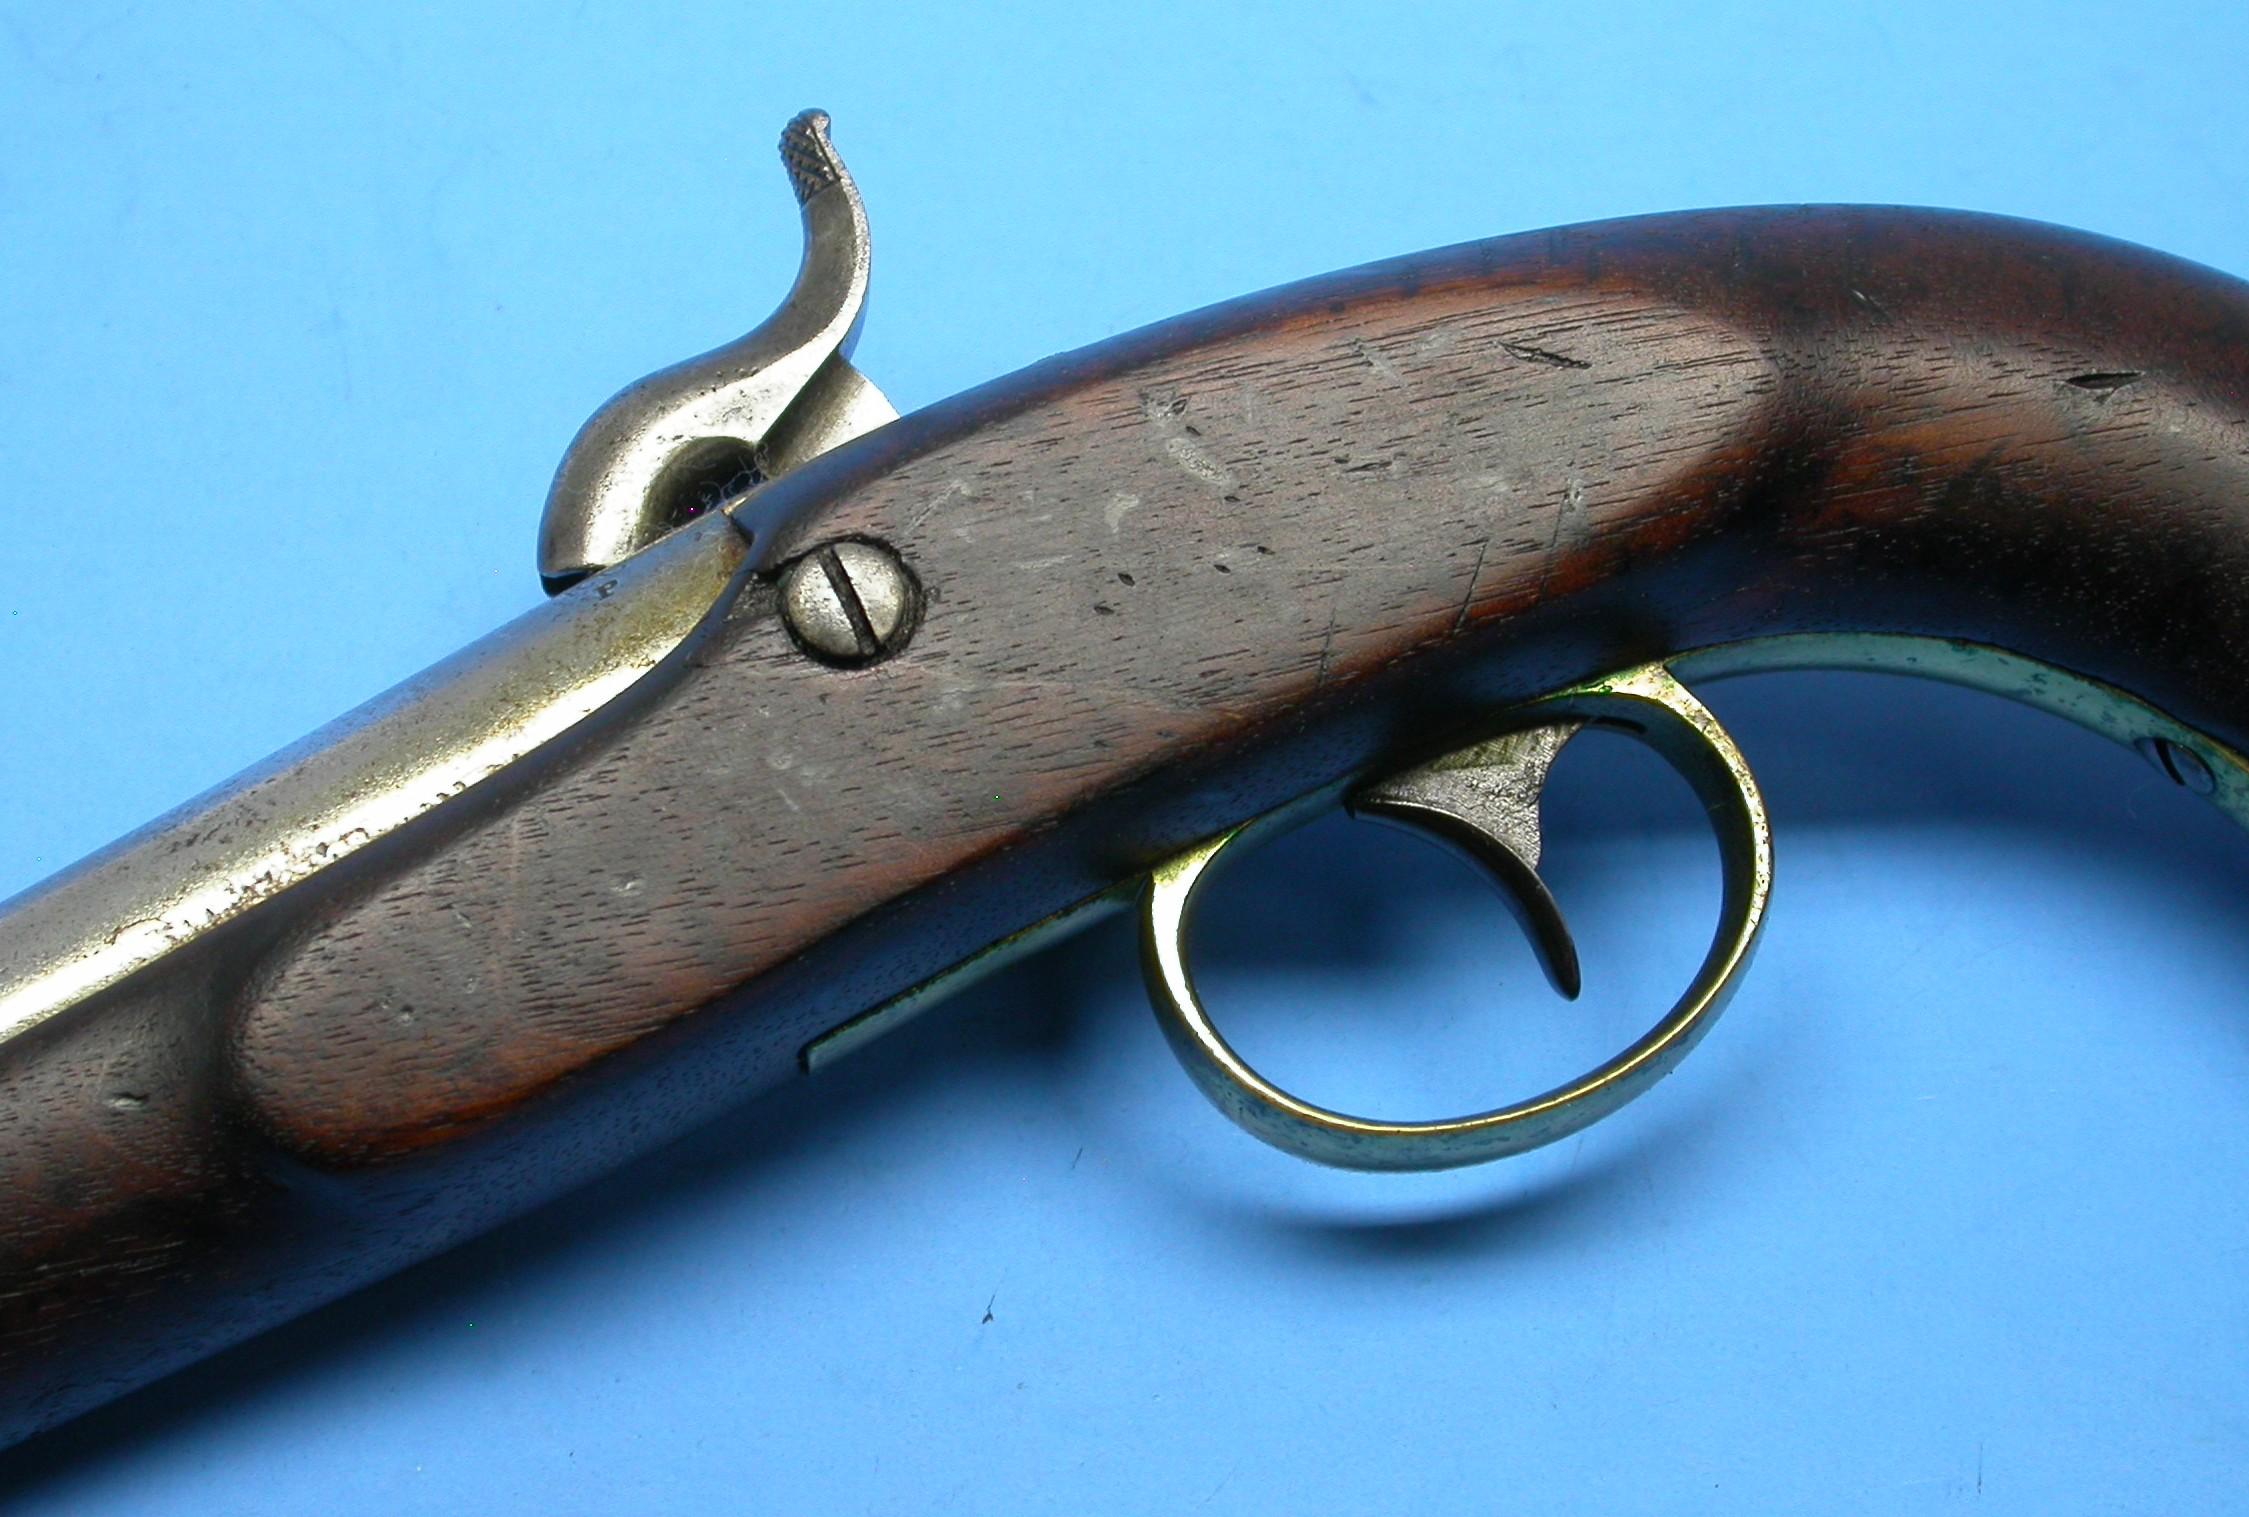 US Navy Model 1842 .54 Caliber Percussion Pistol - Antique - no FFL needed (XJE1)